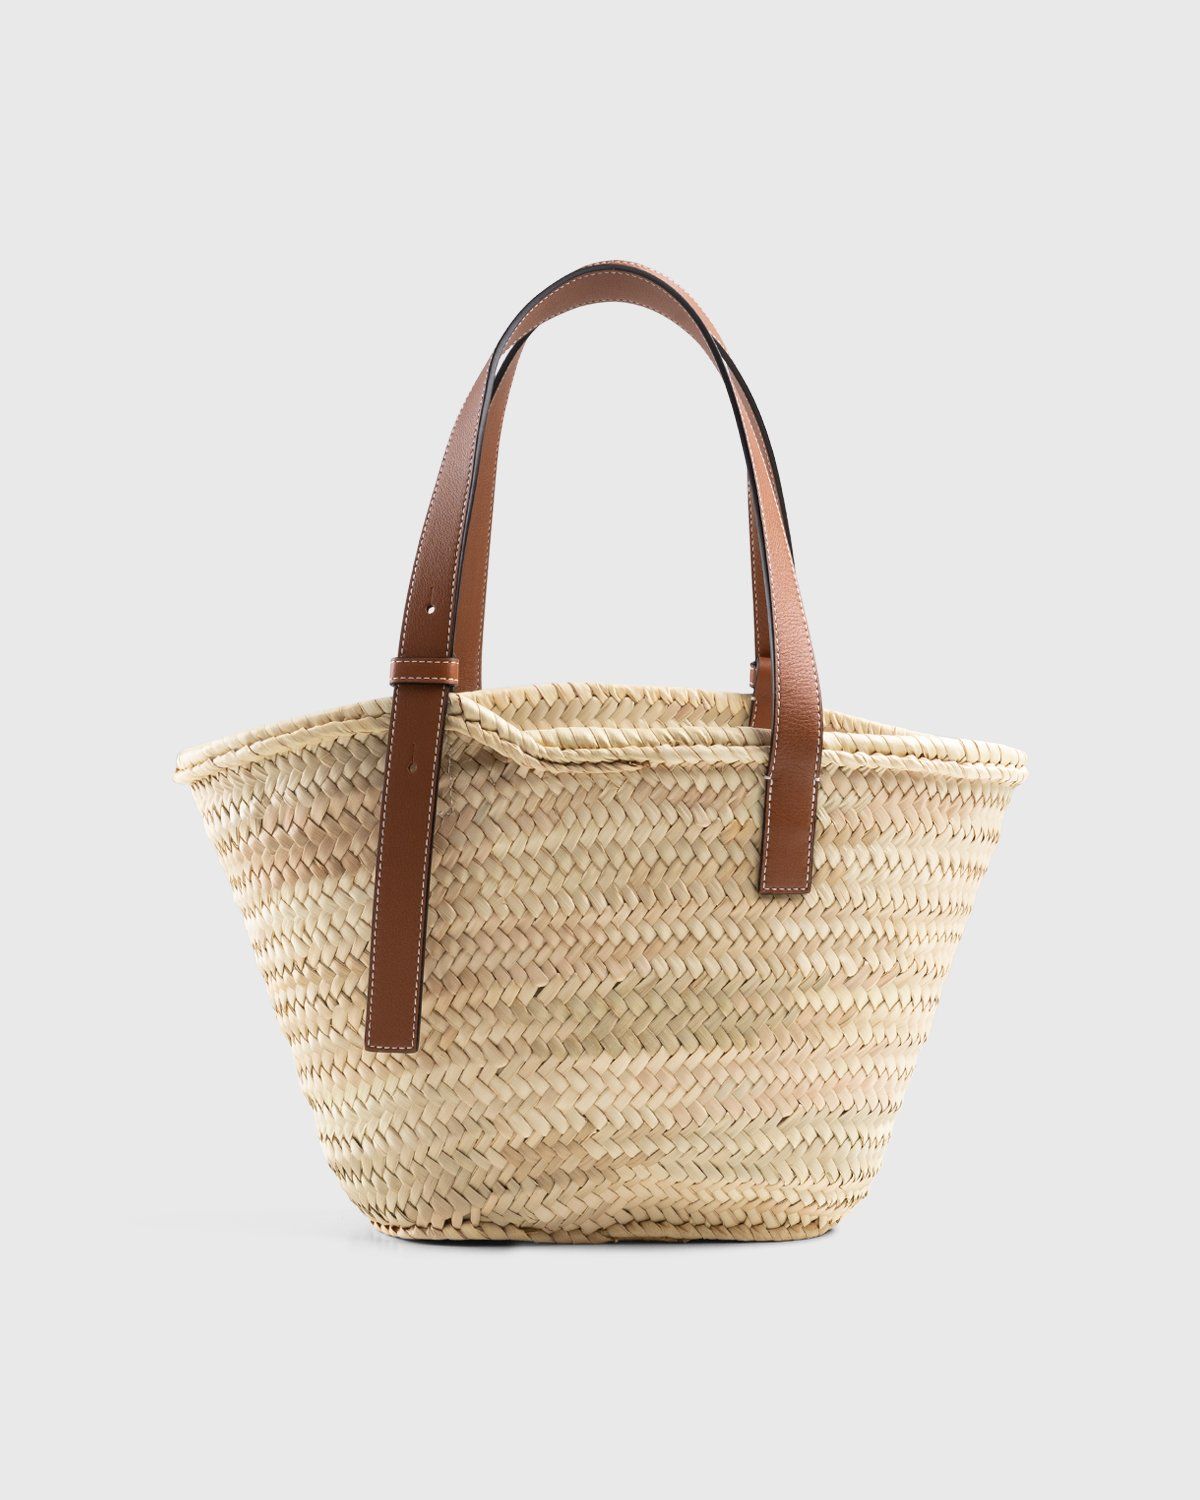 Loewe – Paula's Ibiza Basket Bag Natural/Tan | Highsnobiety Shop